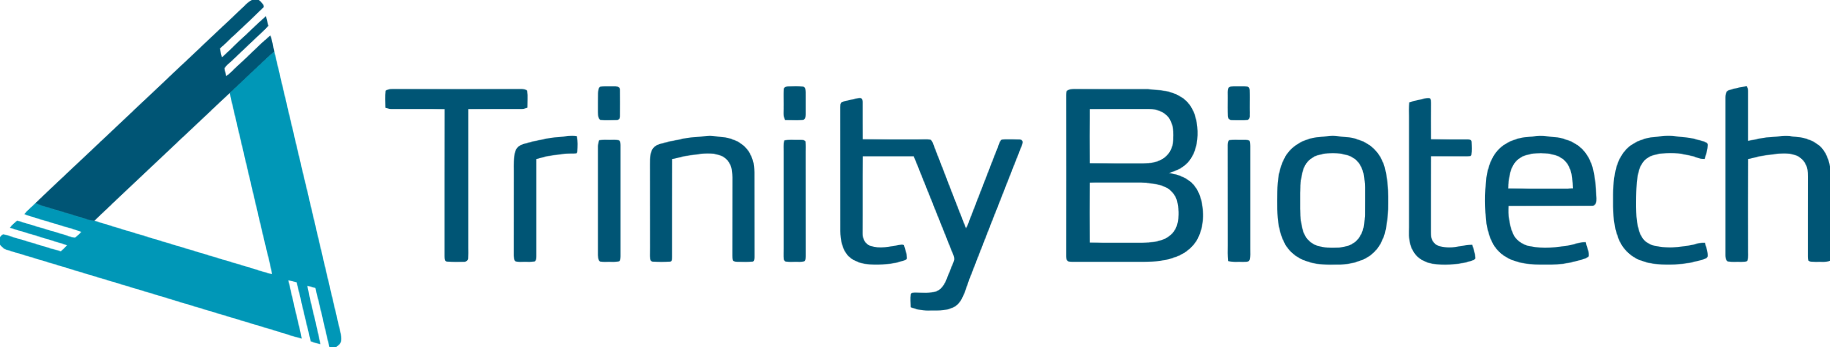 Trinity Biotech
 logo large (transparent PNG)